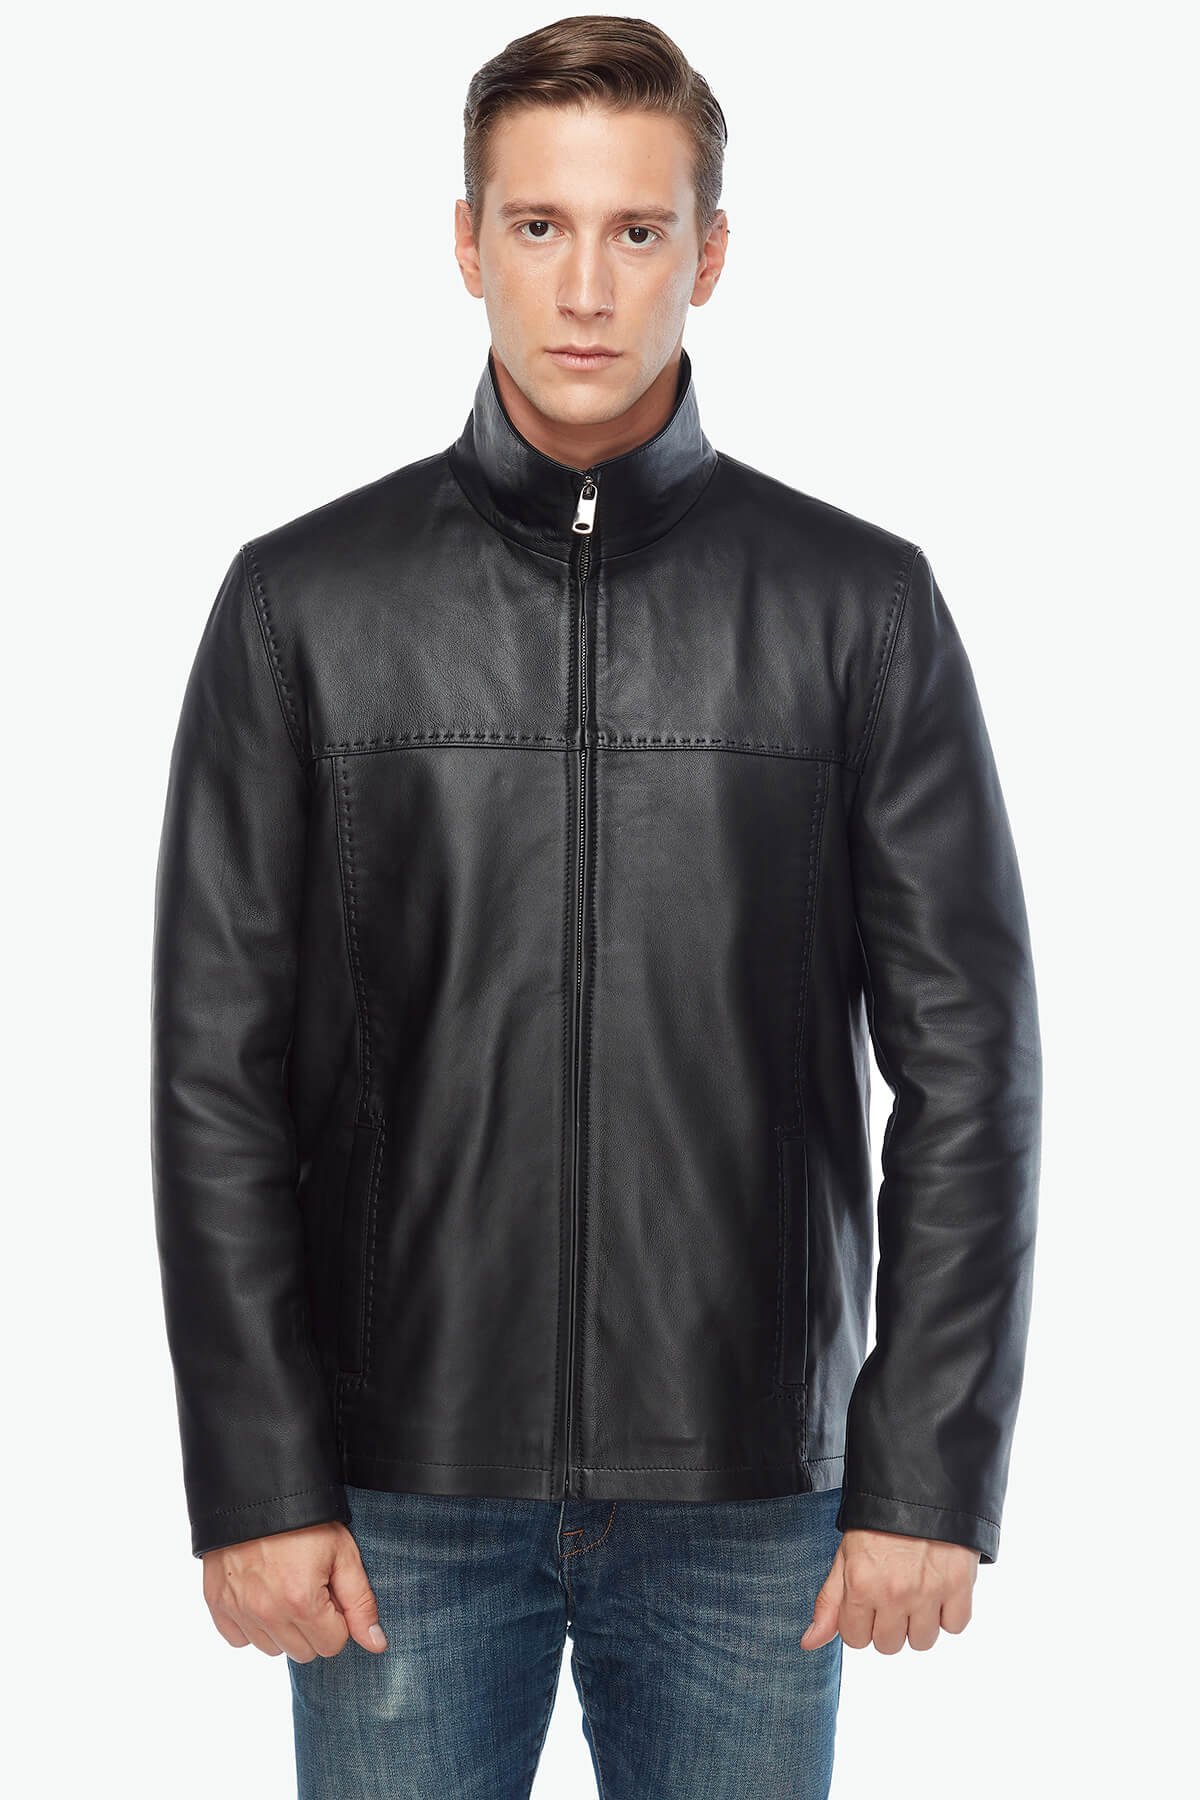 Korpium Men's Black Leather Jacket